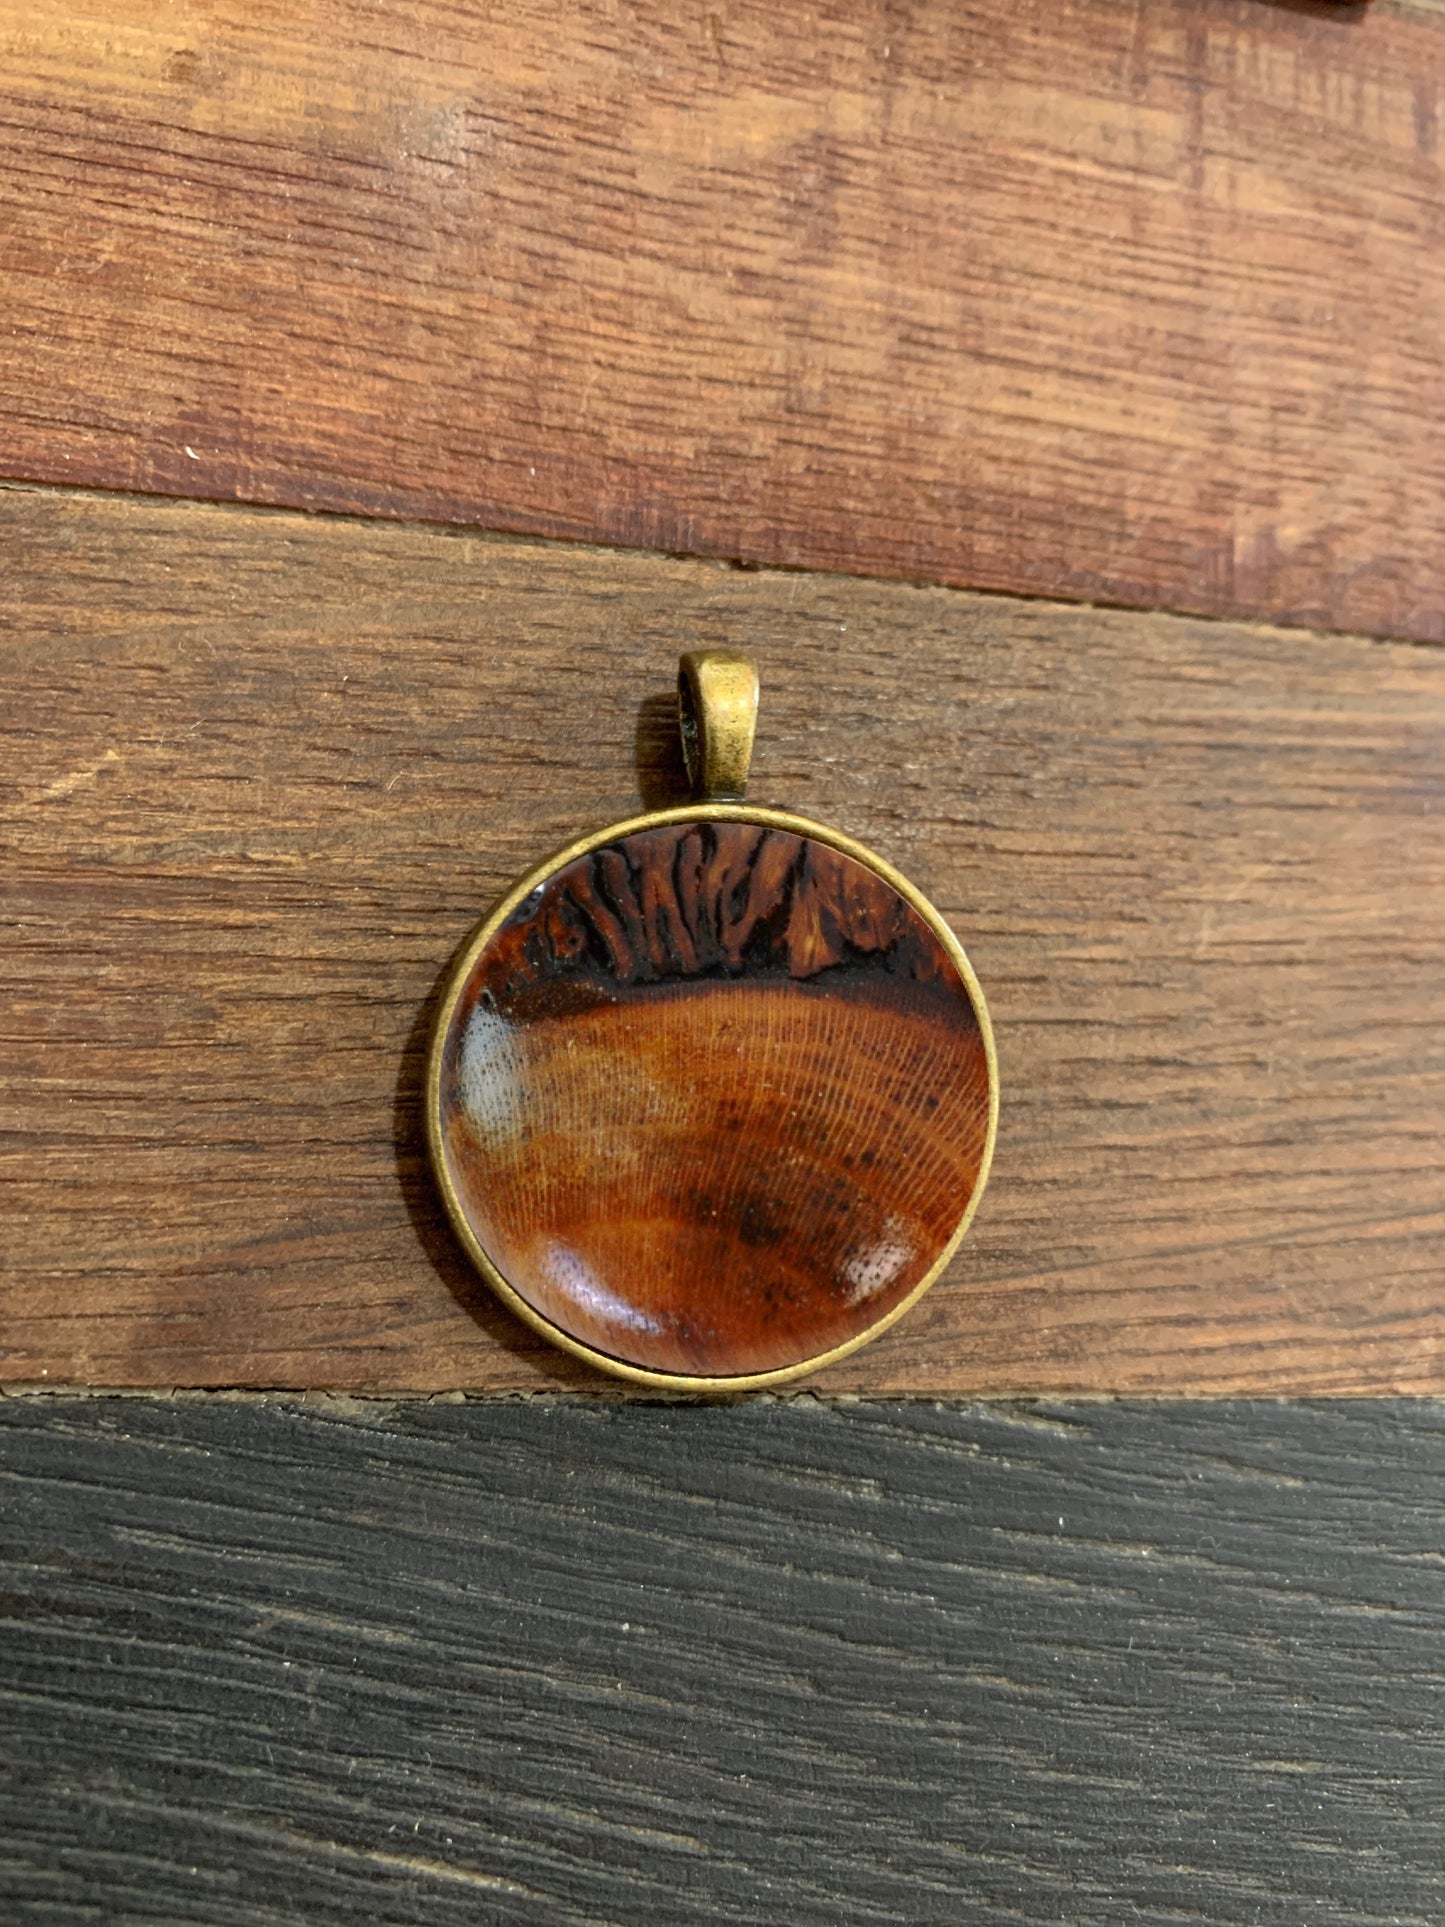 Old Vine Pendant - Bitzy Copper - Inlaid with Low Profile Retired California Grape Vine Wood